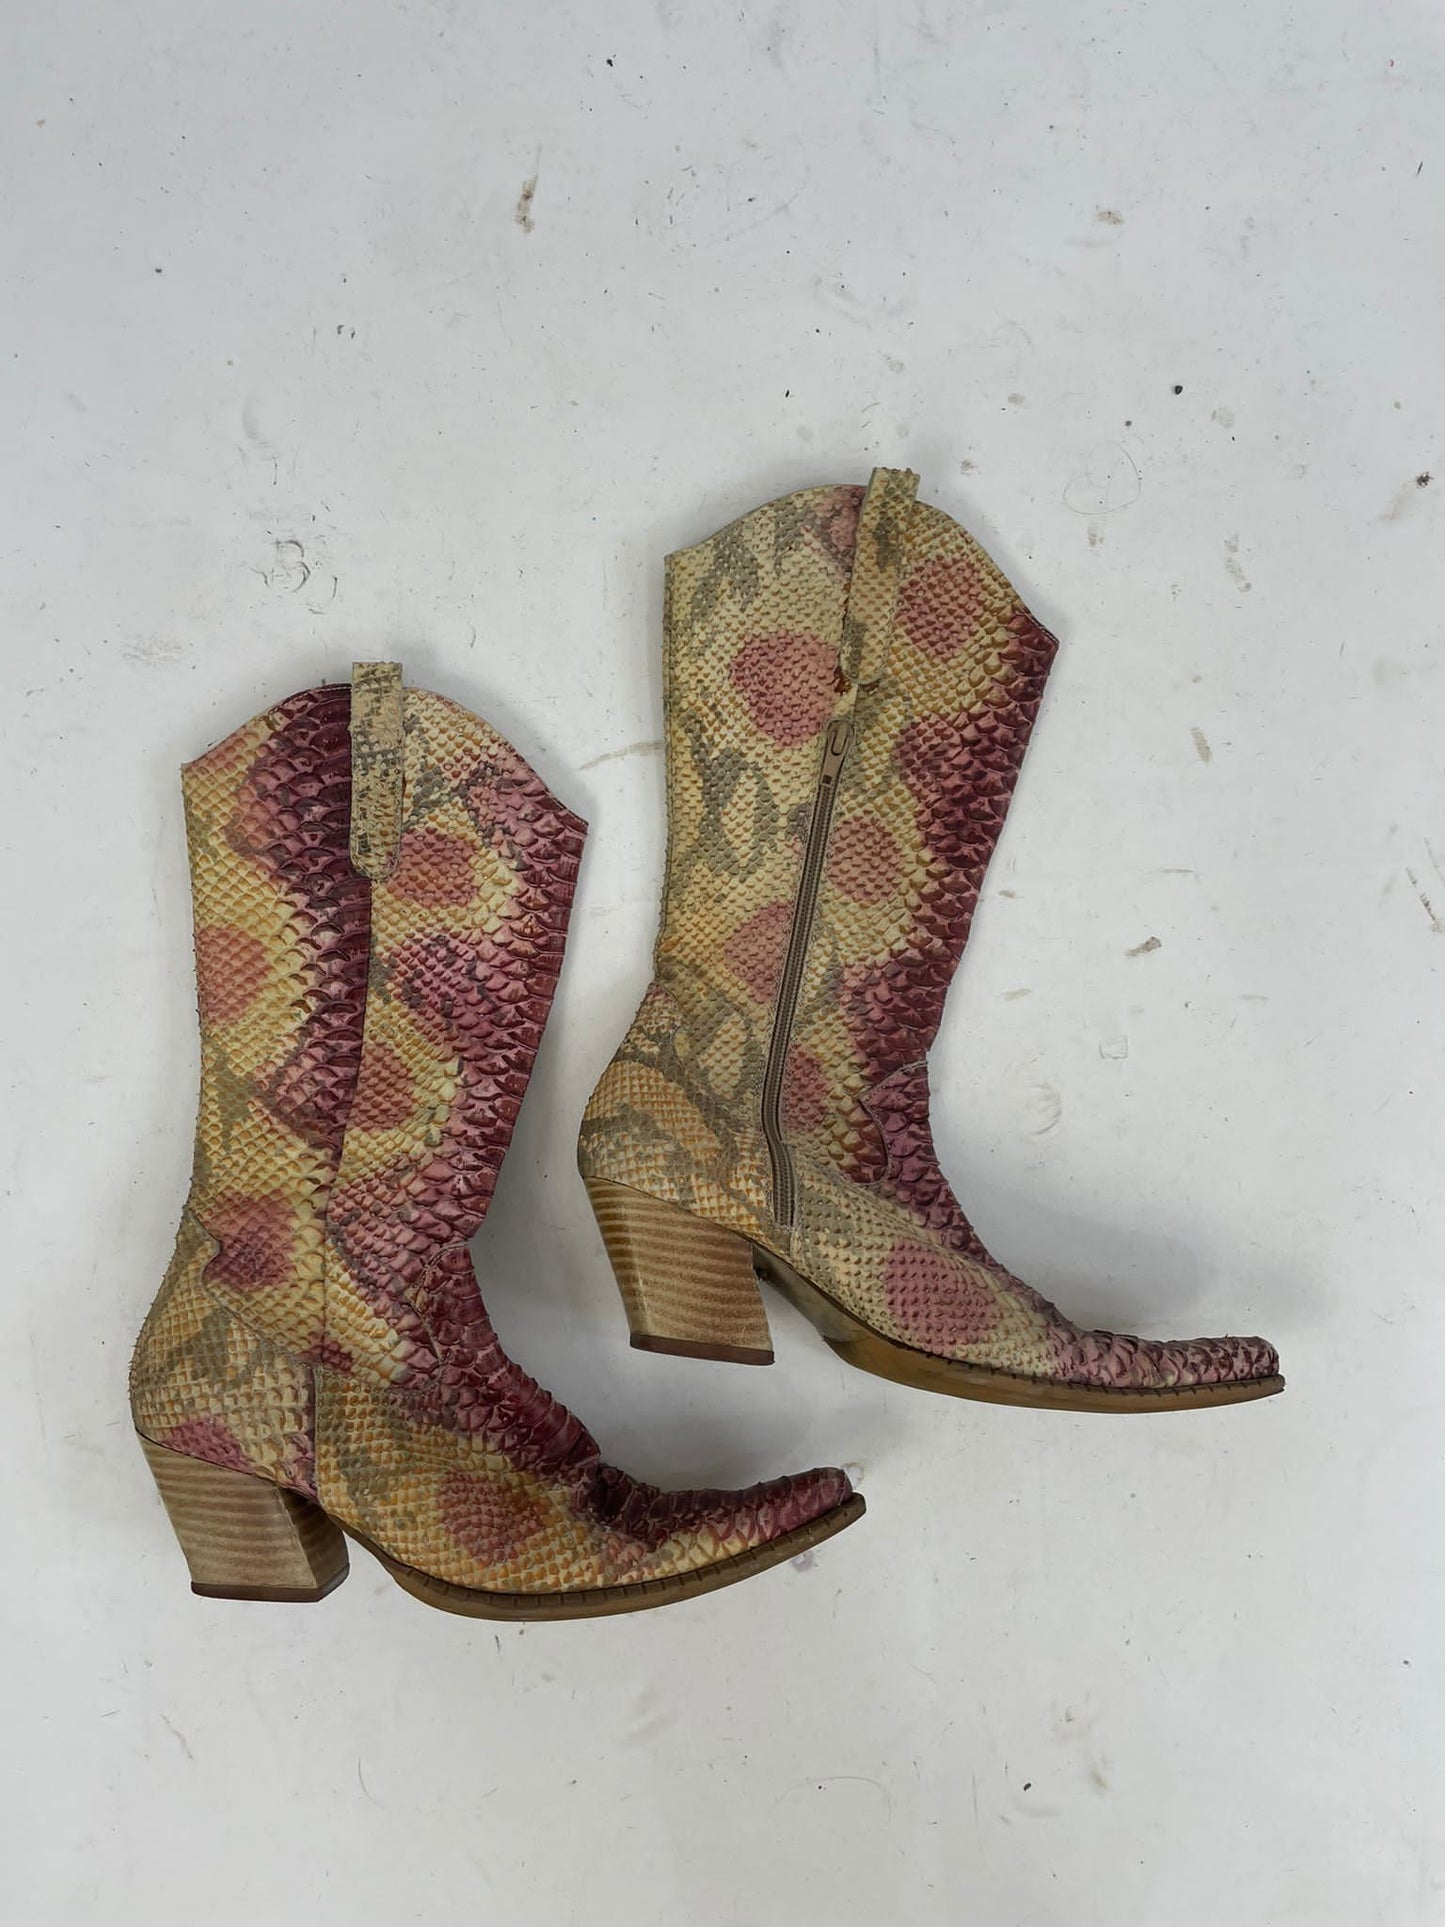 ⭐️MOB WIFE DROP | size 4 beige/pink snakeskin cowboy boots